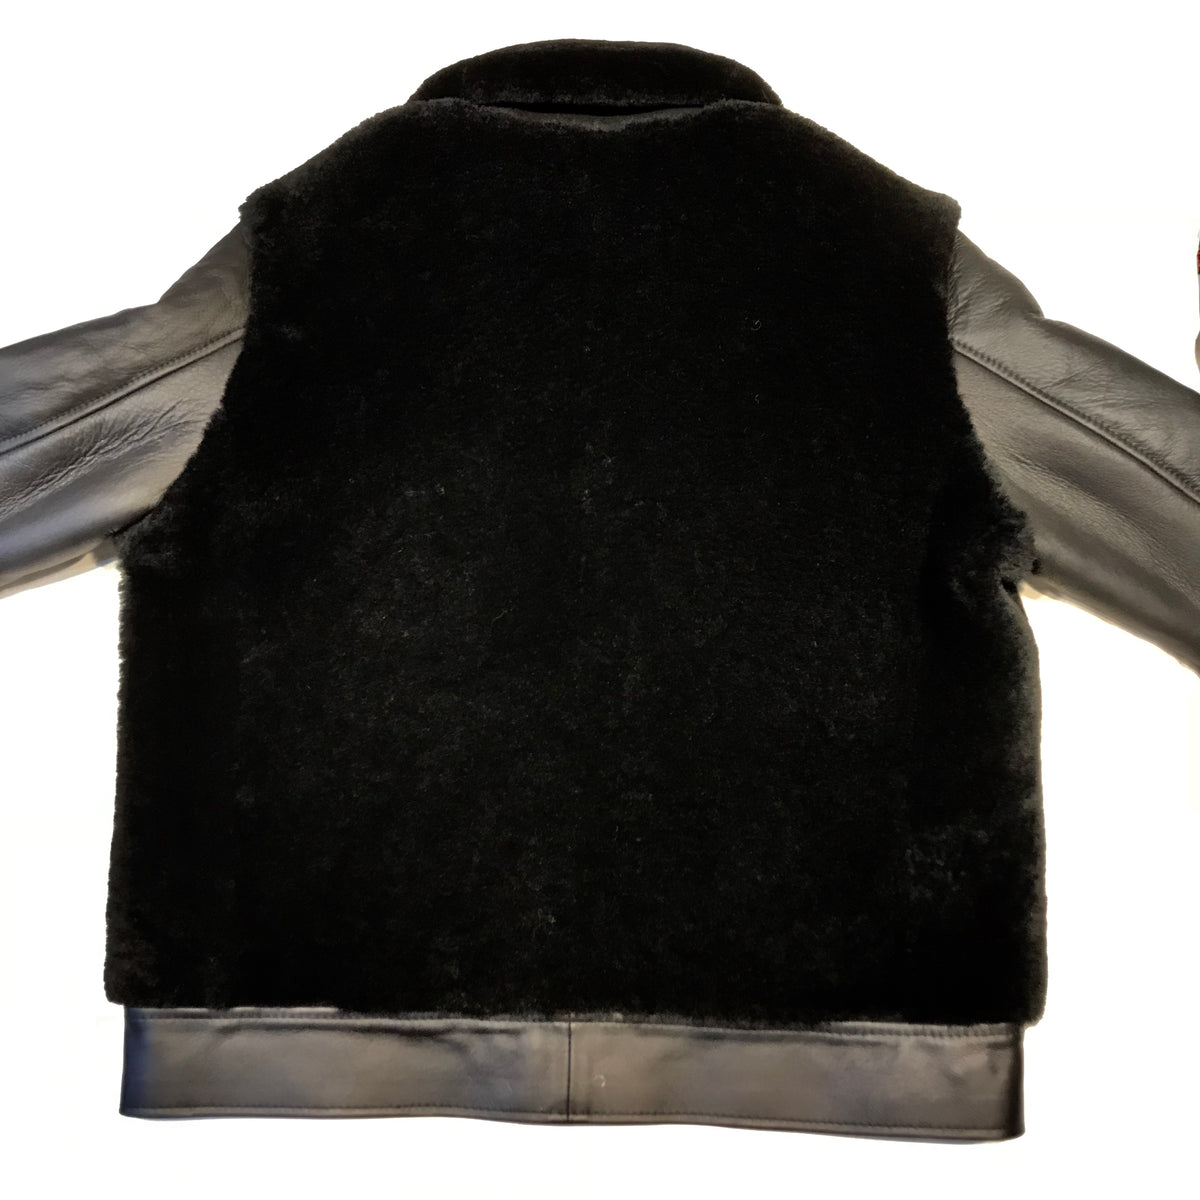 Kashani Jet Black Double Pocket Mouton Shearling Jacket - Dudes Boutique